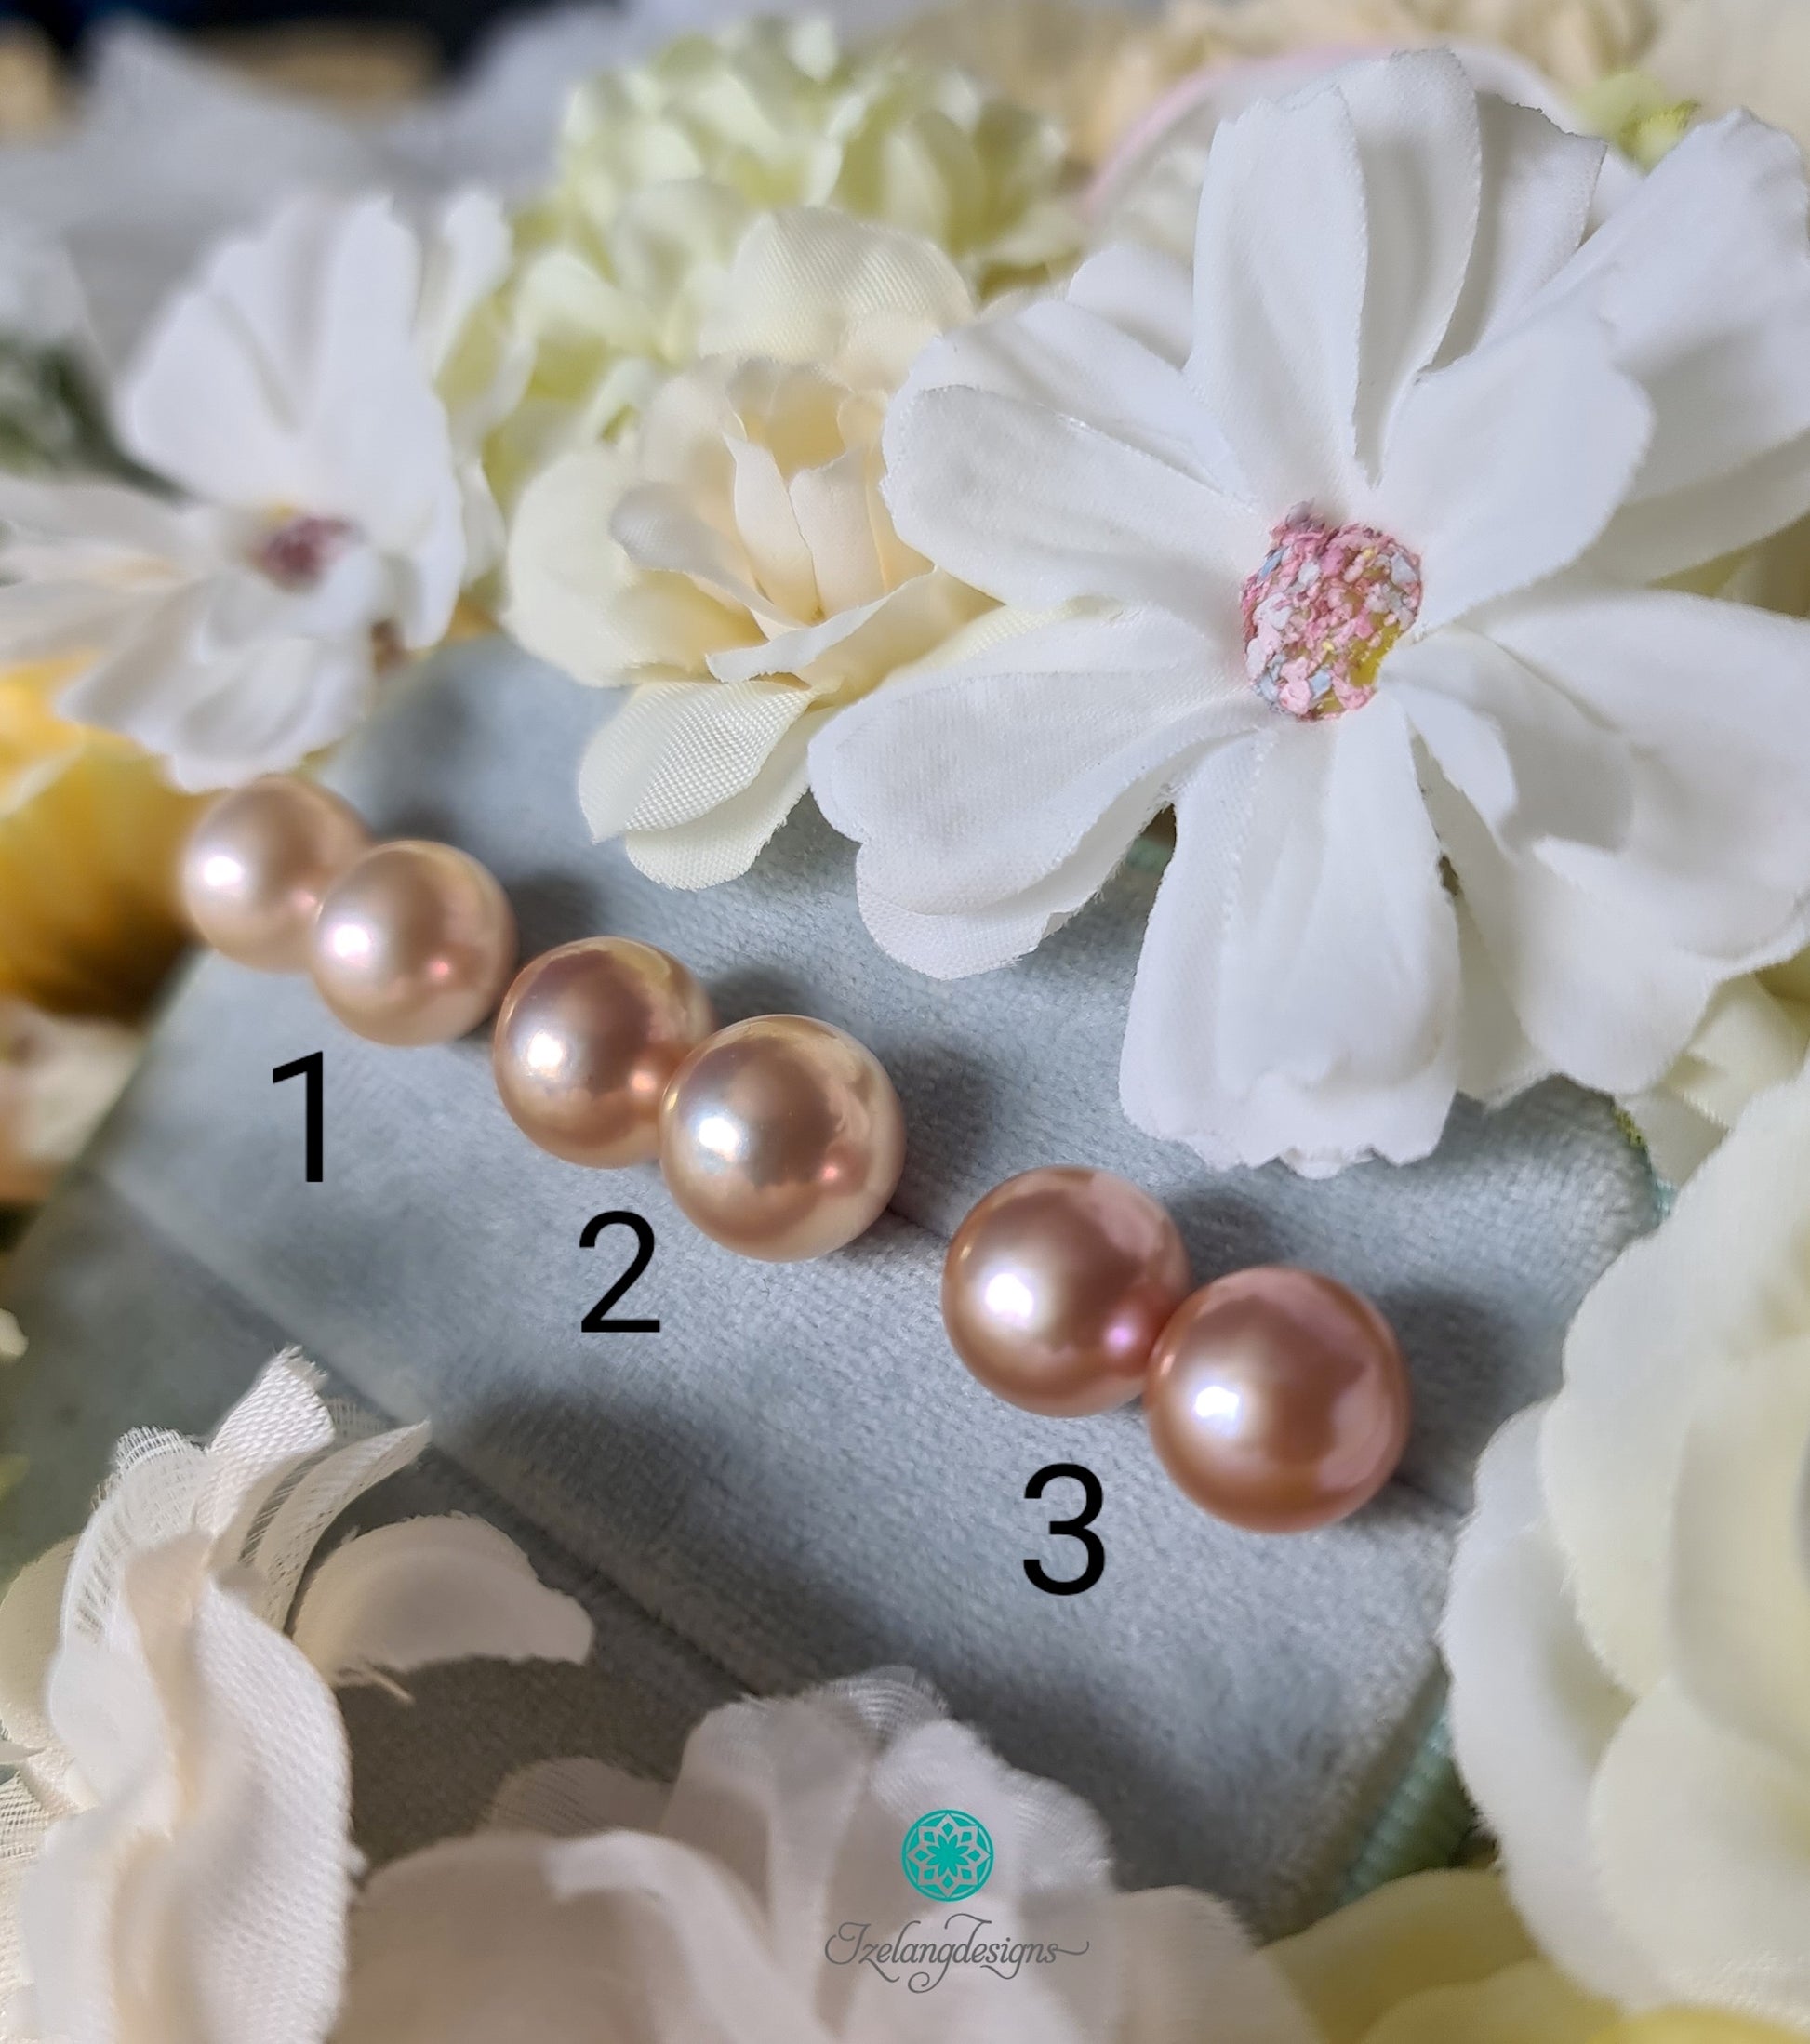 10-11mm Round Golden Pink Edison Pearls Stud Earring 14K Gold Filled-EGM114